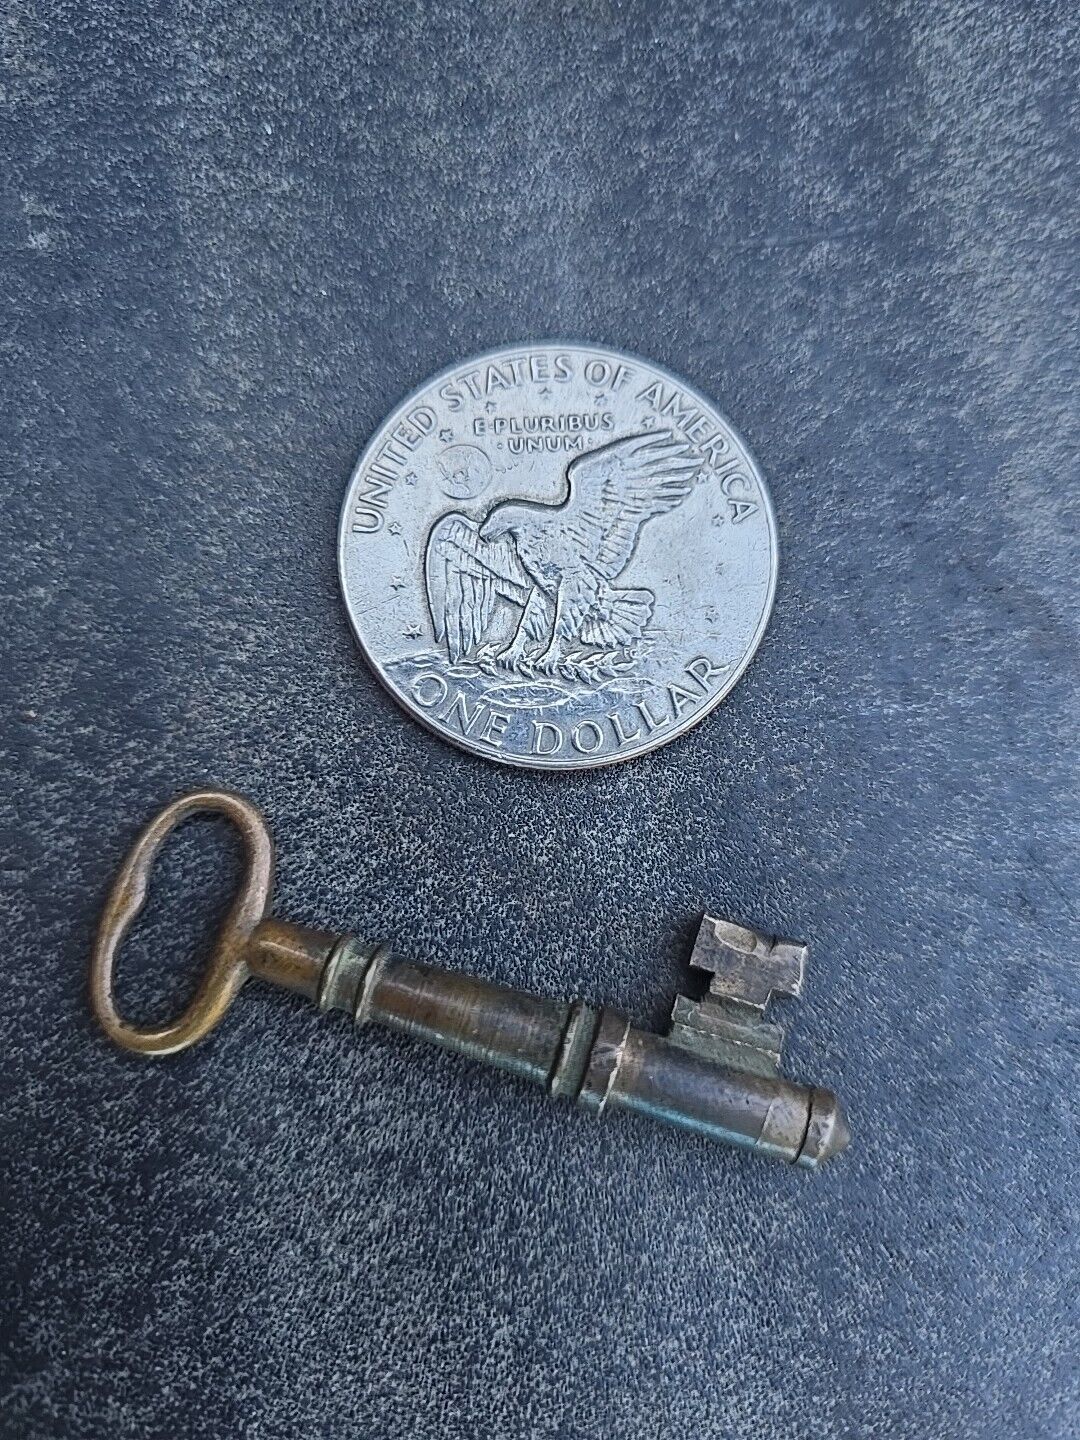 Beautiful Old Minature Brass Key☆ Antique Solid Metal Skeleton Key